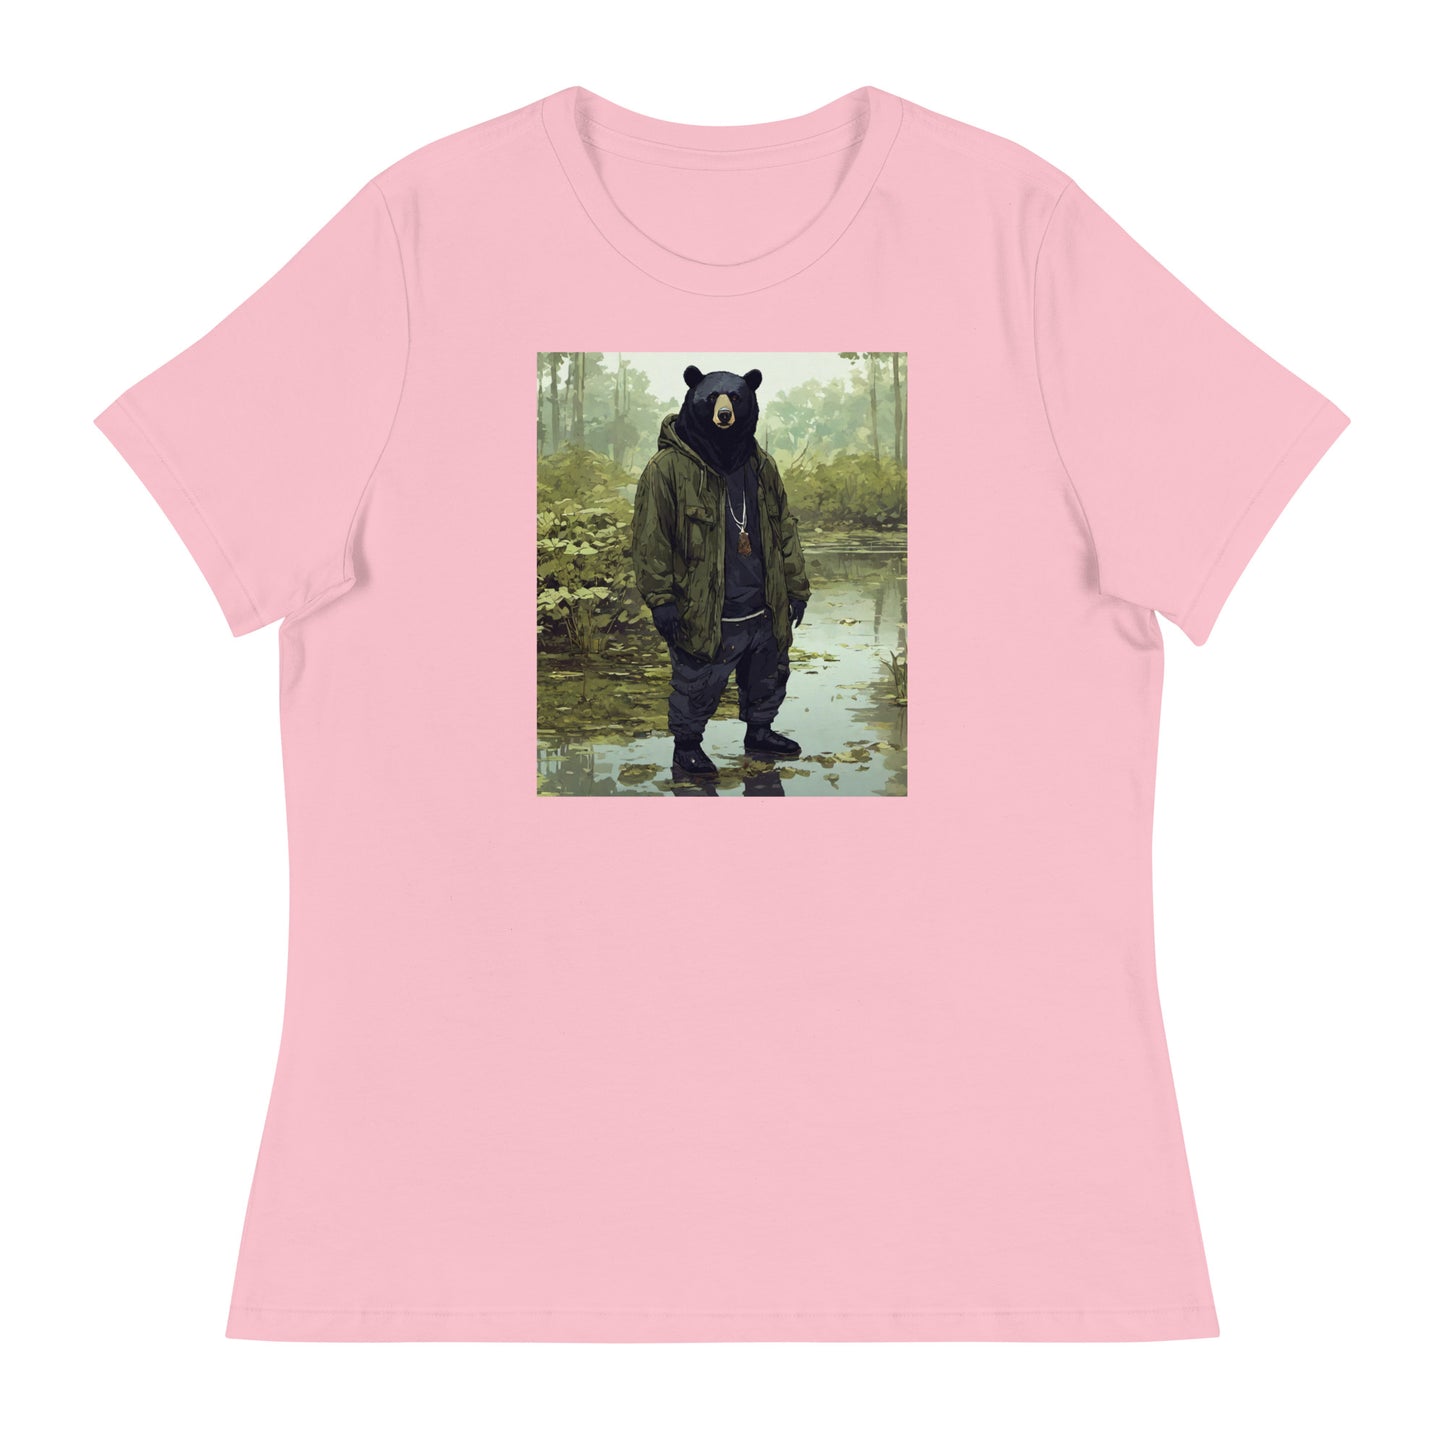 Stoic Black Bear Women's Graphic T-Shirt Pink